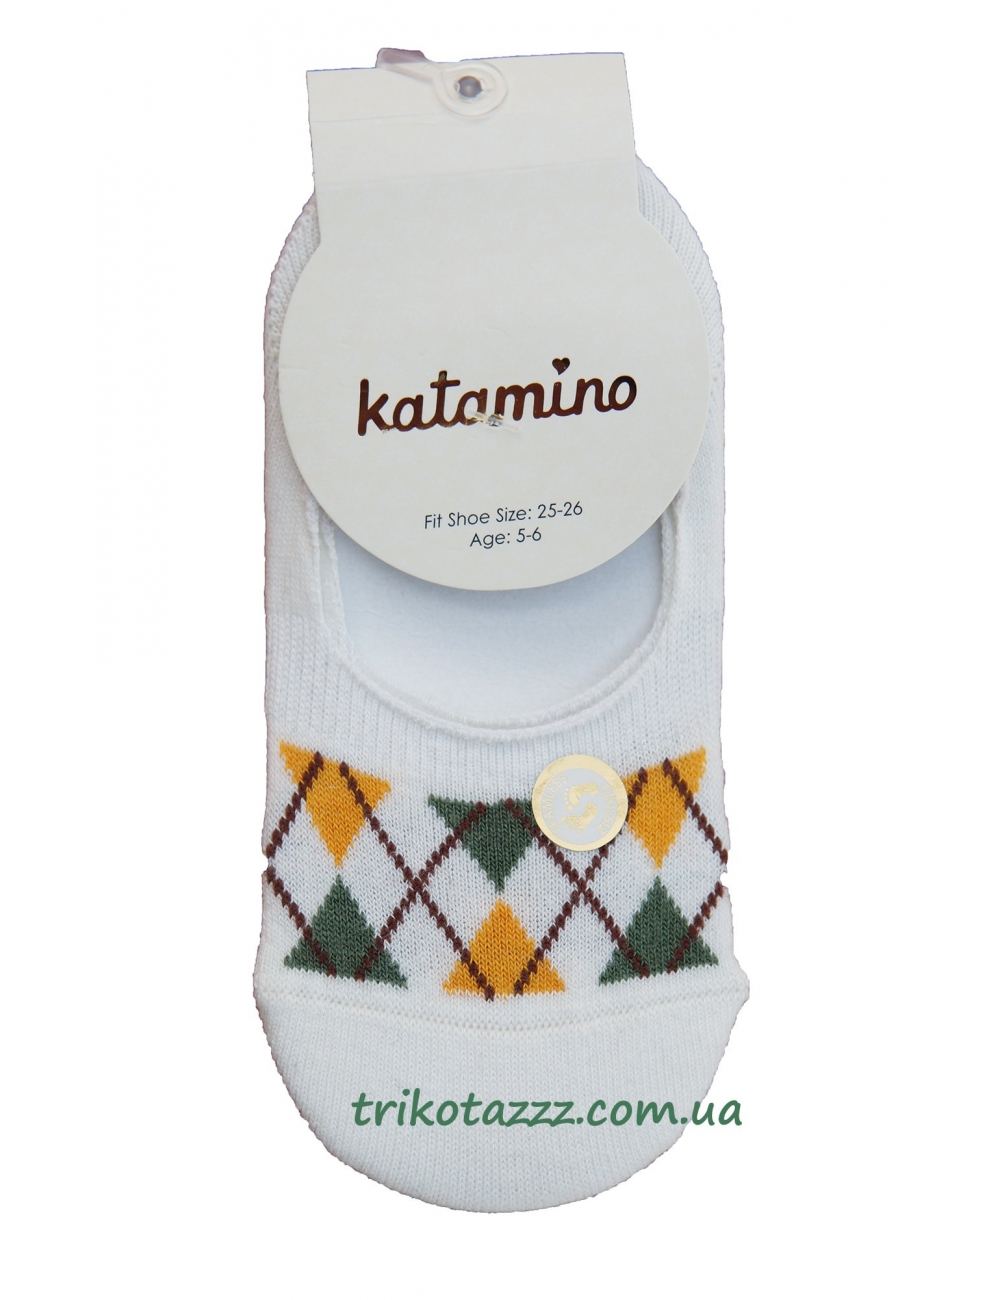 Носки (следы) для мальчика тм"Katamino" Ekose Erkek белые